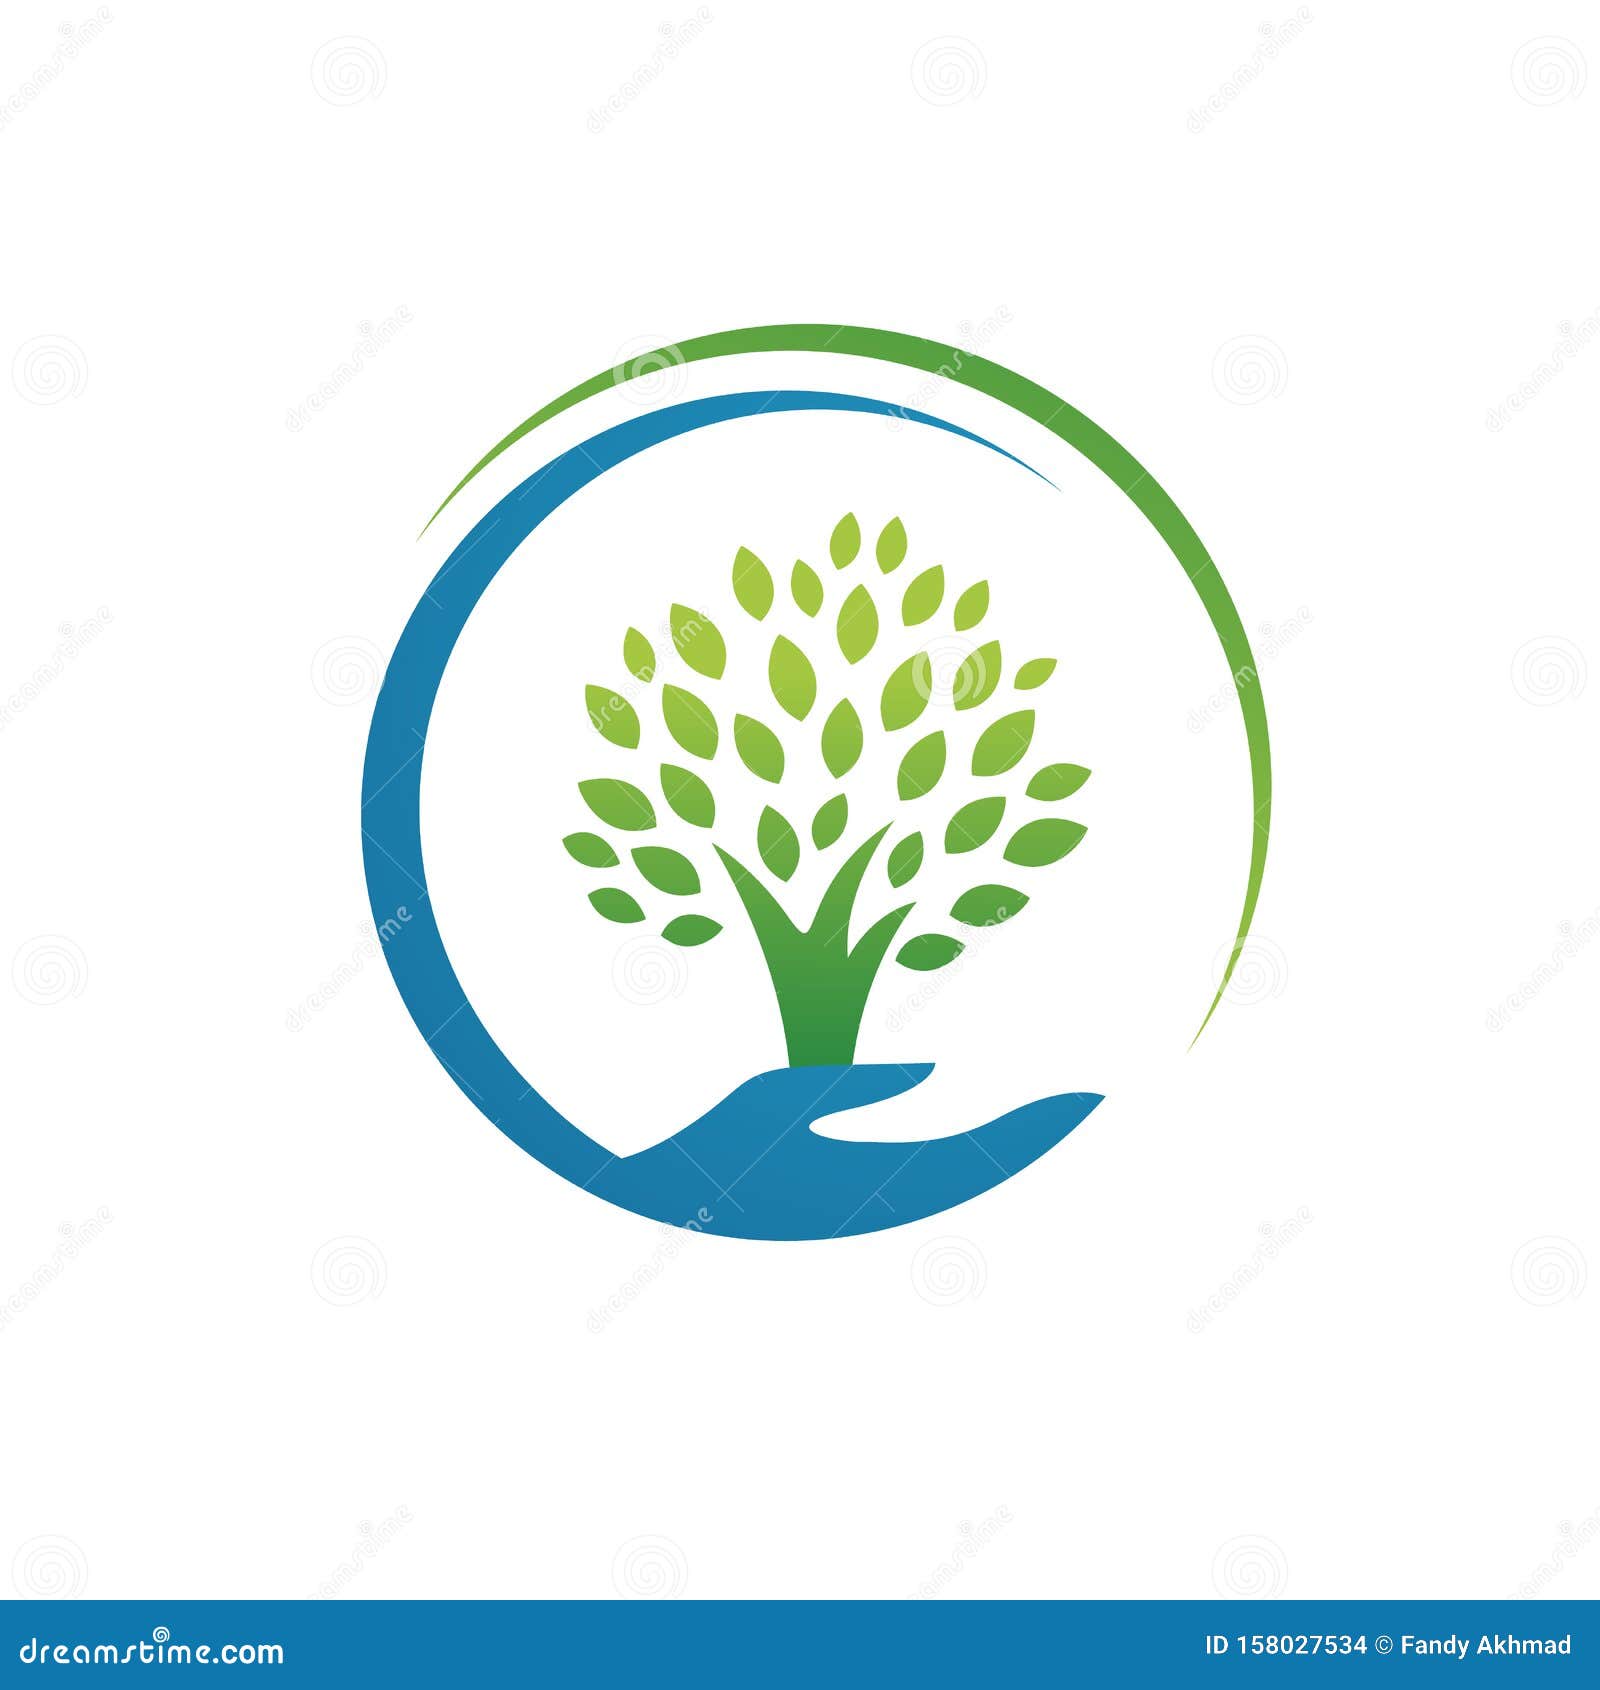 Create a Tree Logo Free - Online Leaf Logo Maker